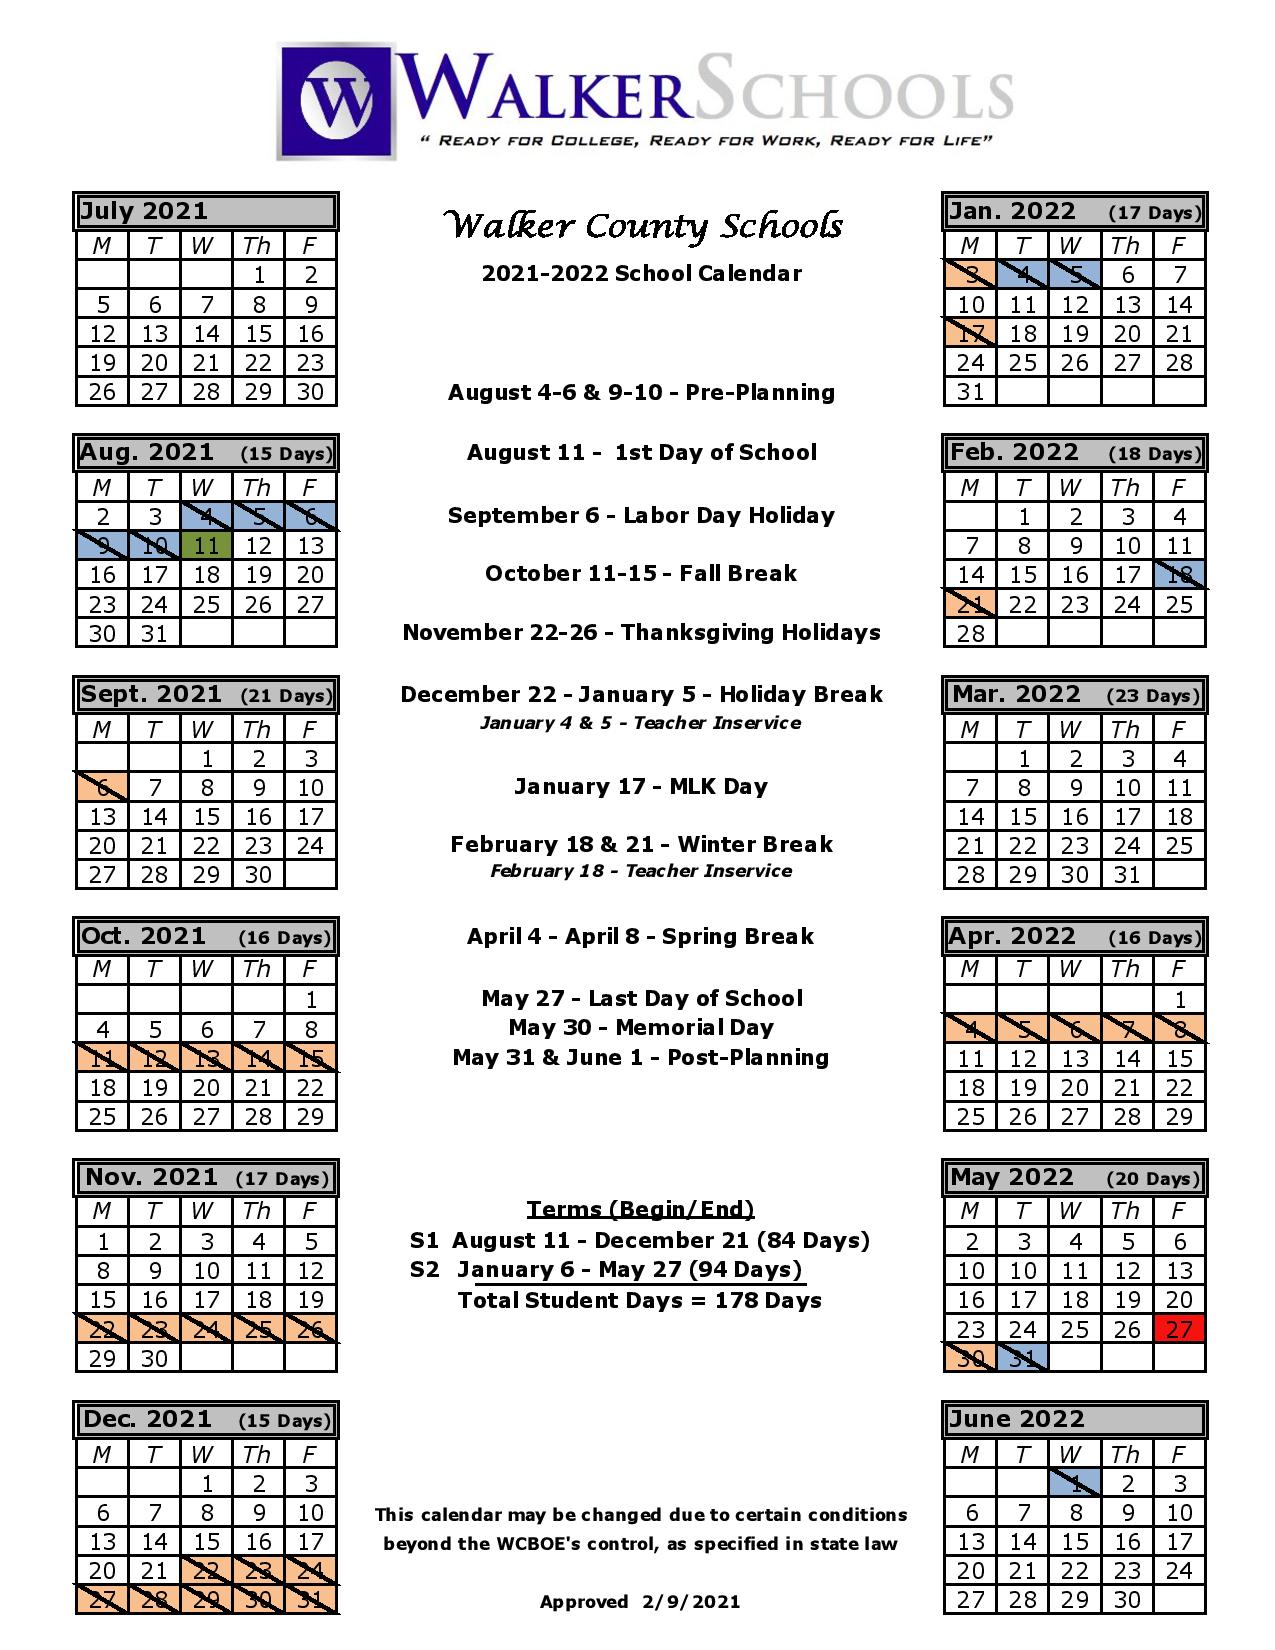 Walker County Schools Calendar 2022 in PDF